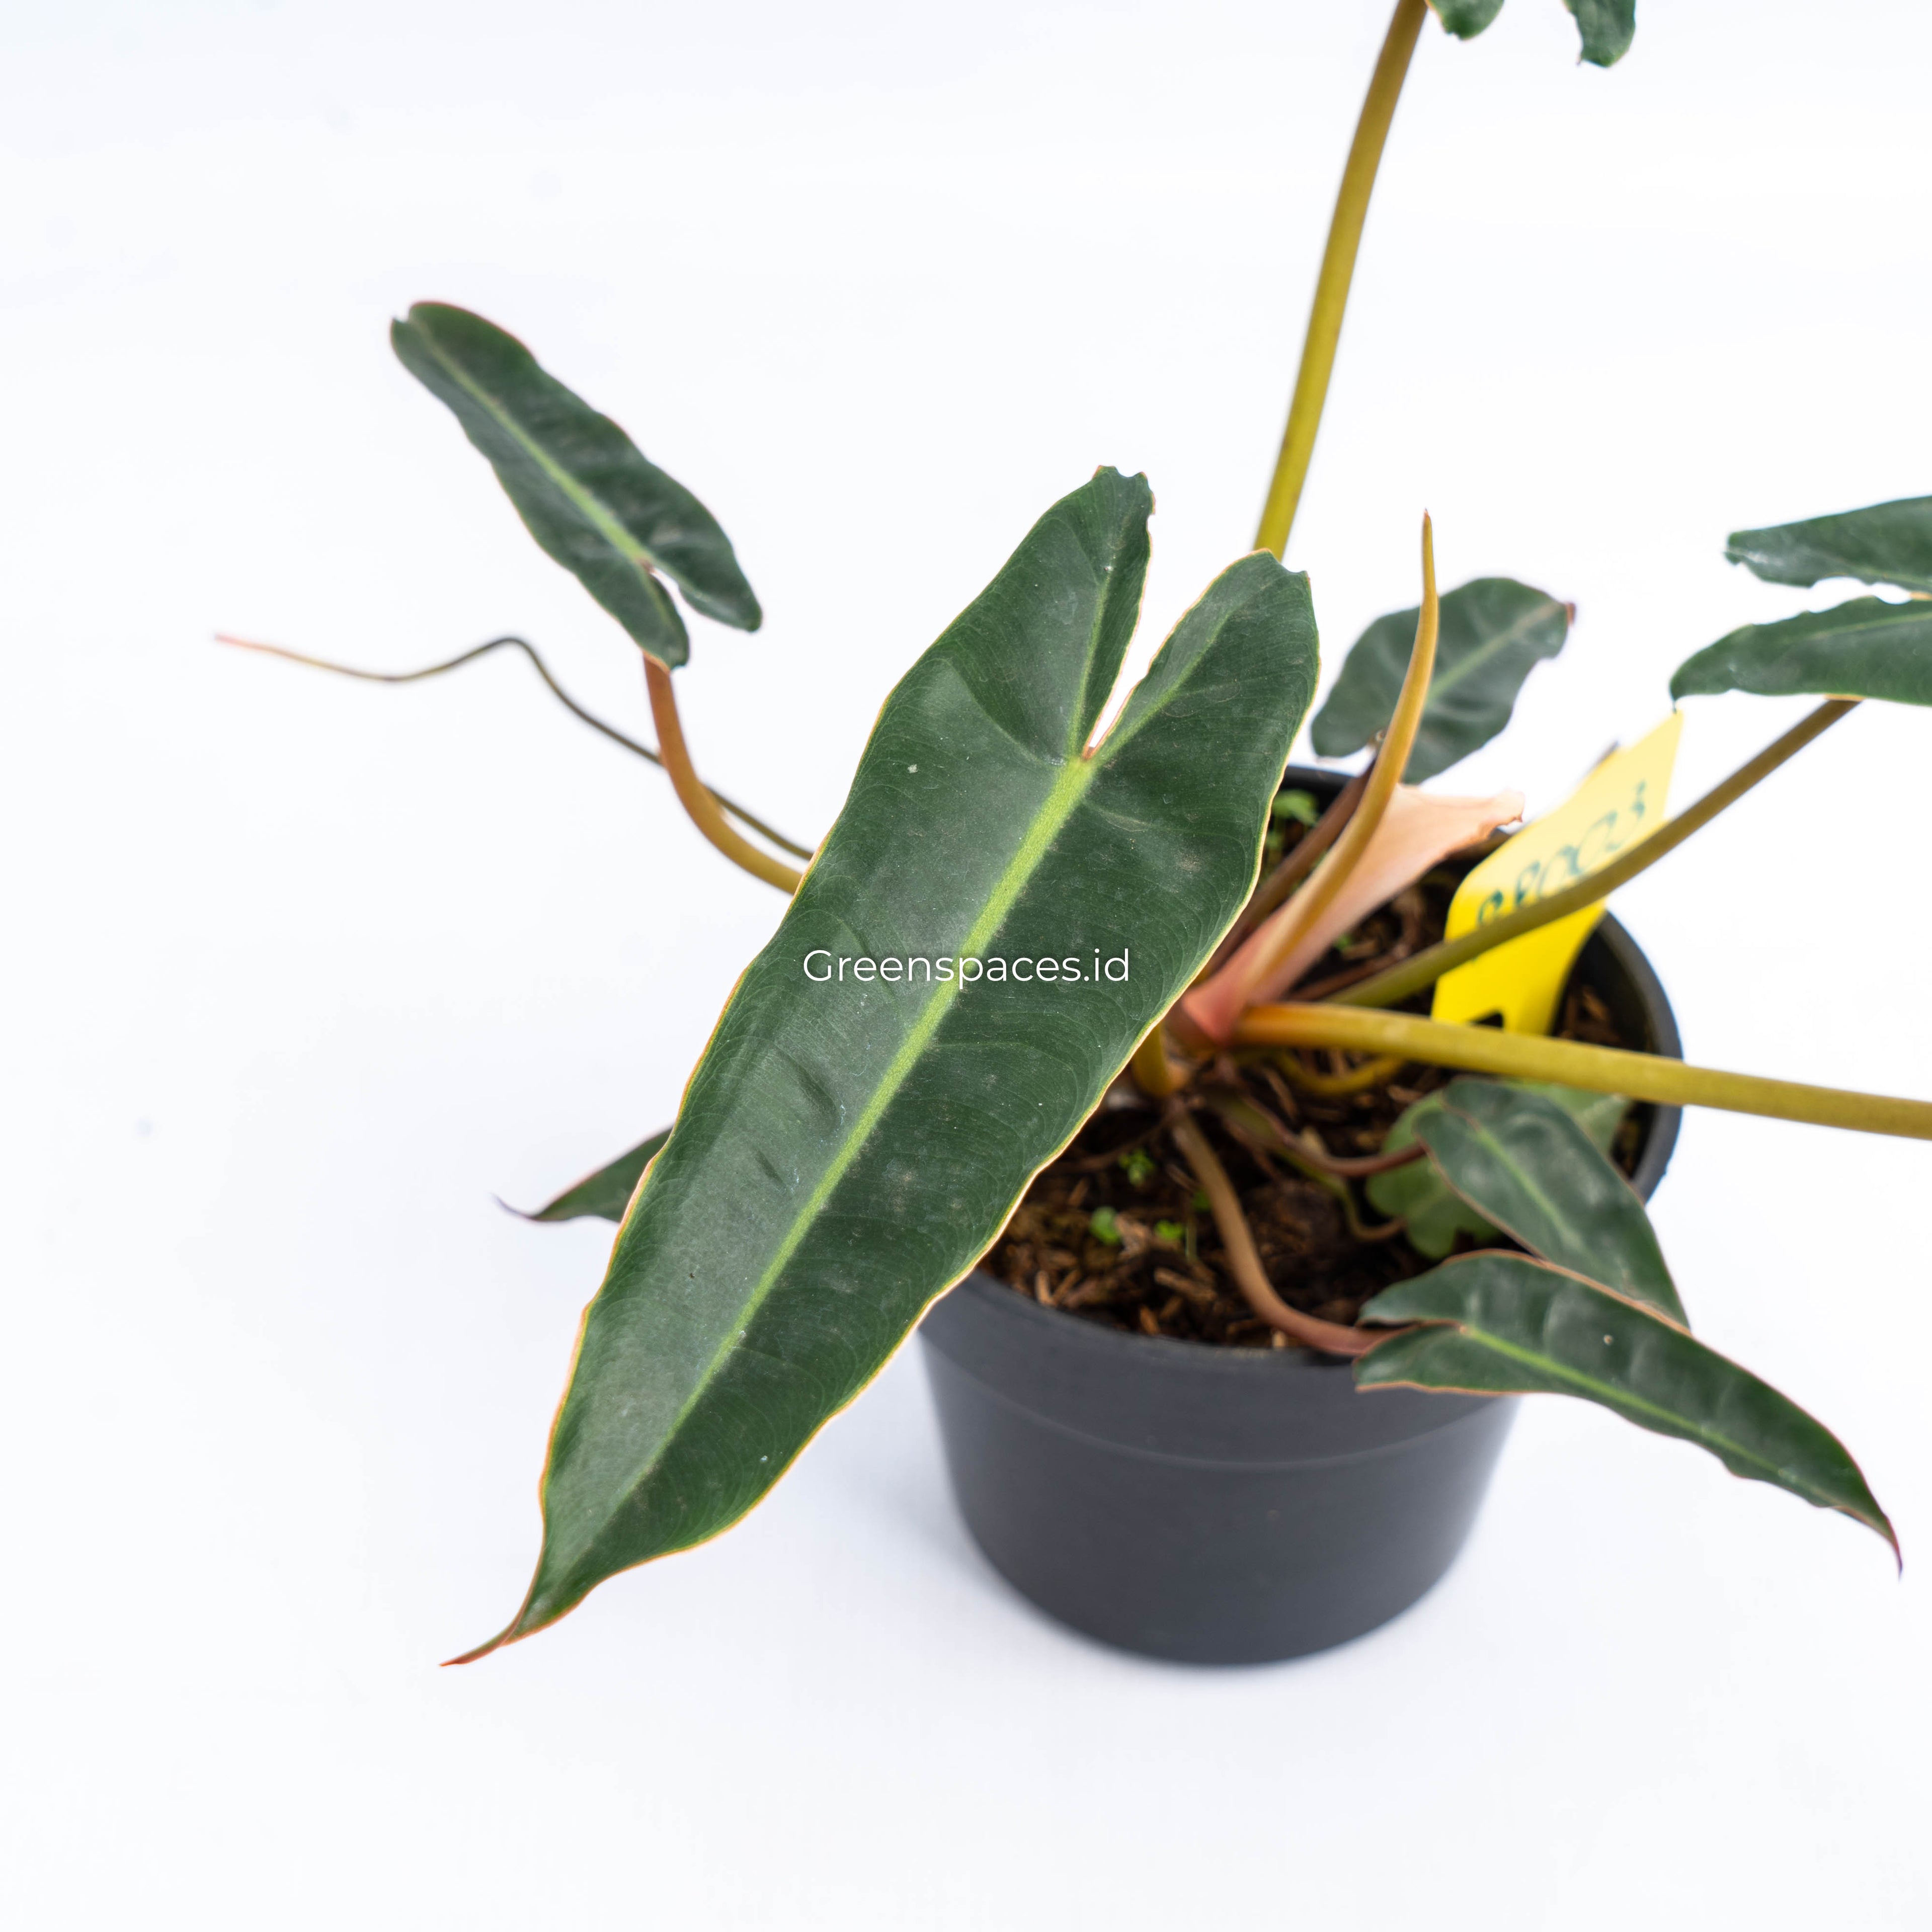 RP003 Philodendron Billiteae